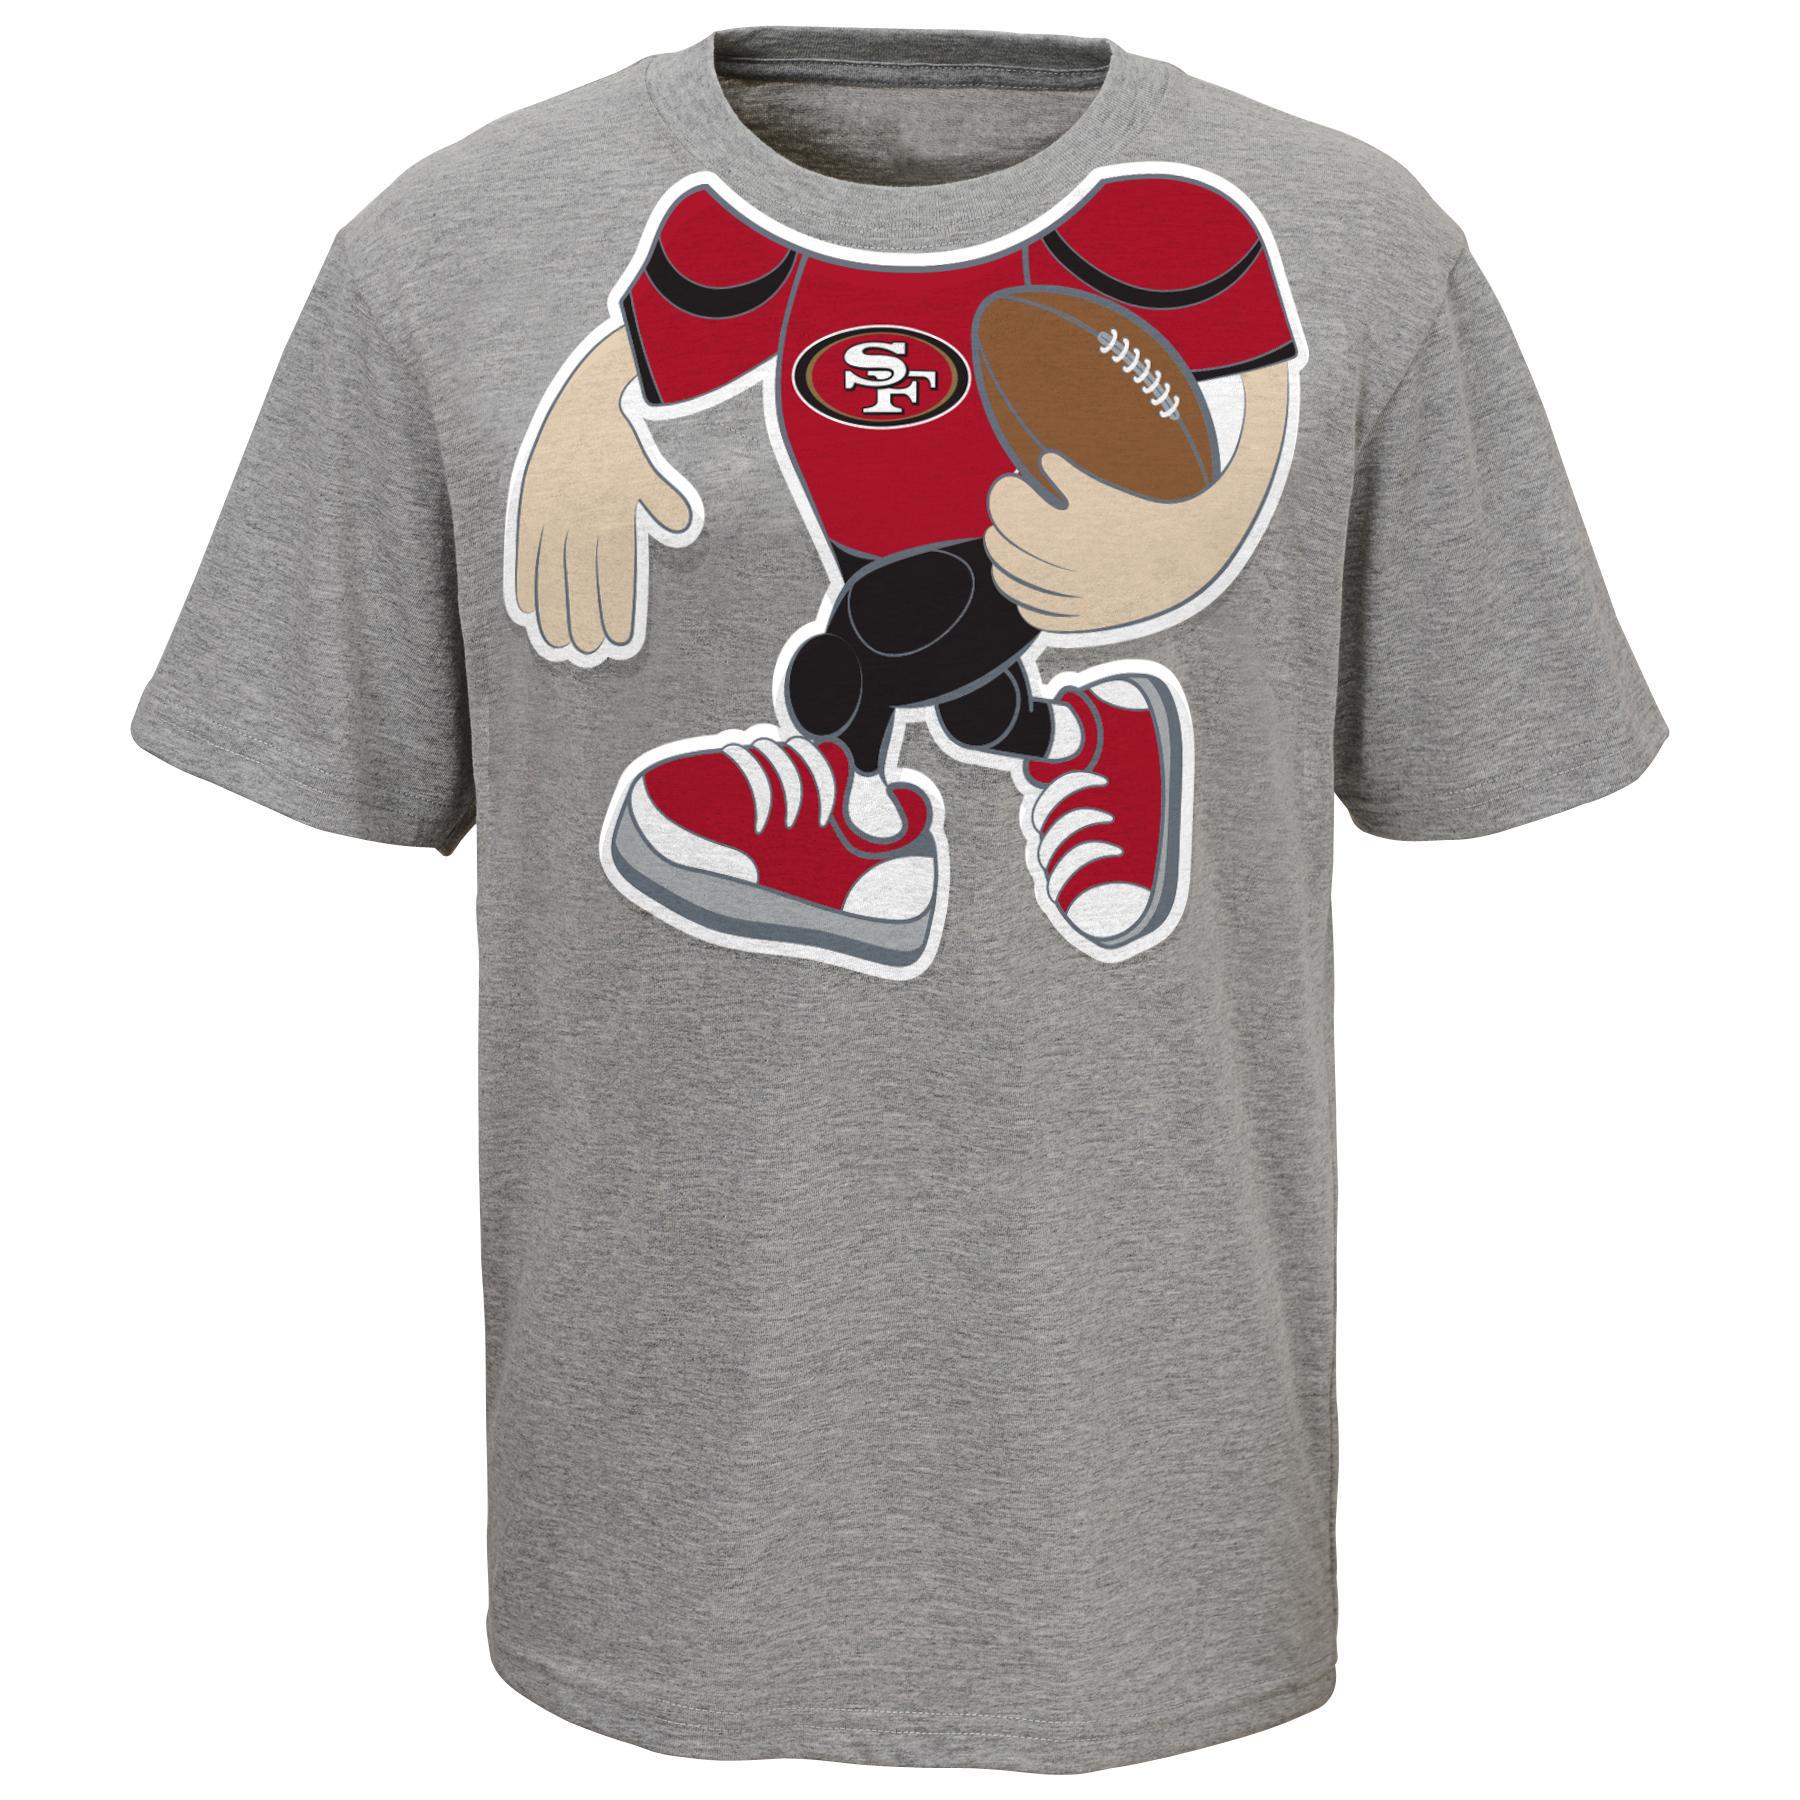 NFL Toddler Boys' Graphic T-Shirt - San Francisco 49ers